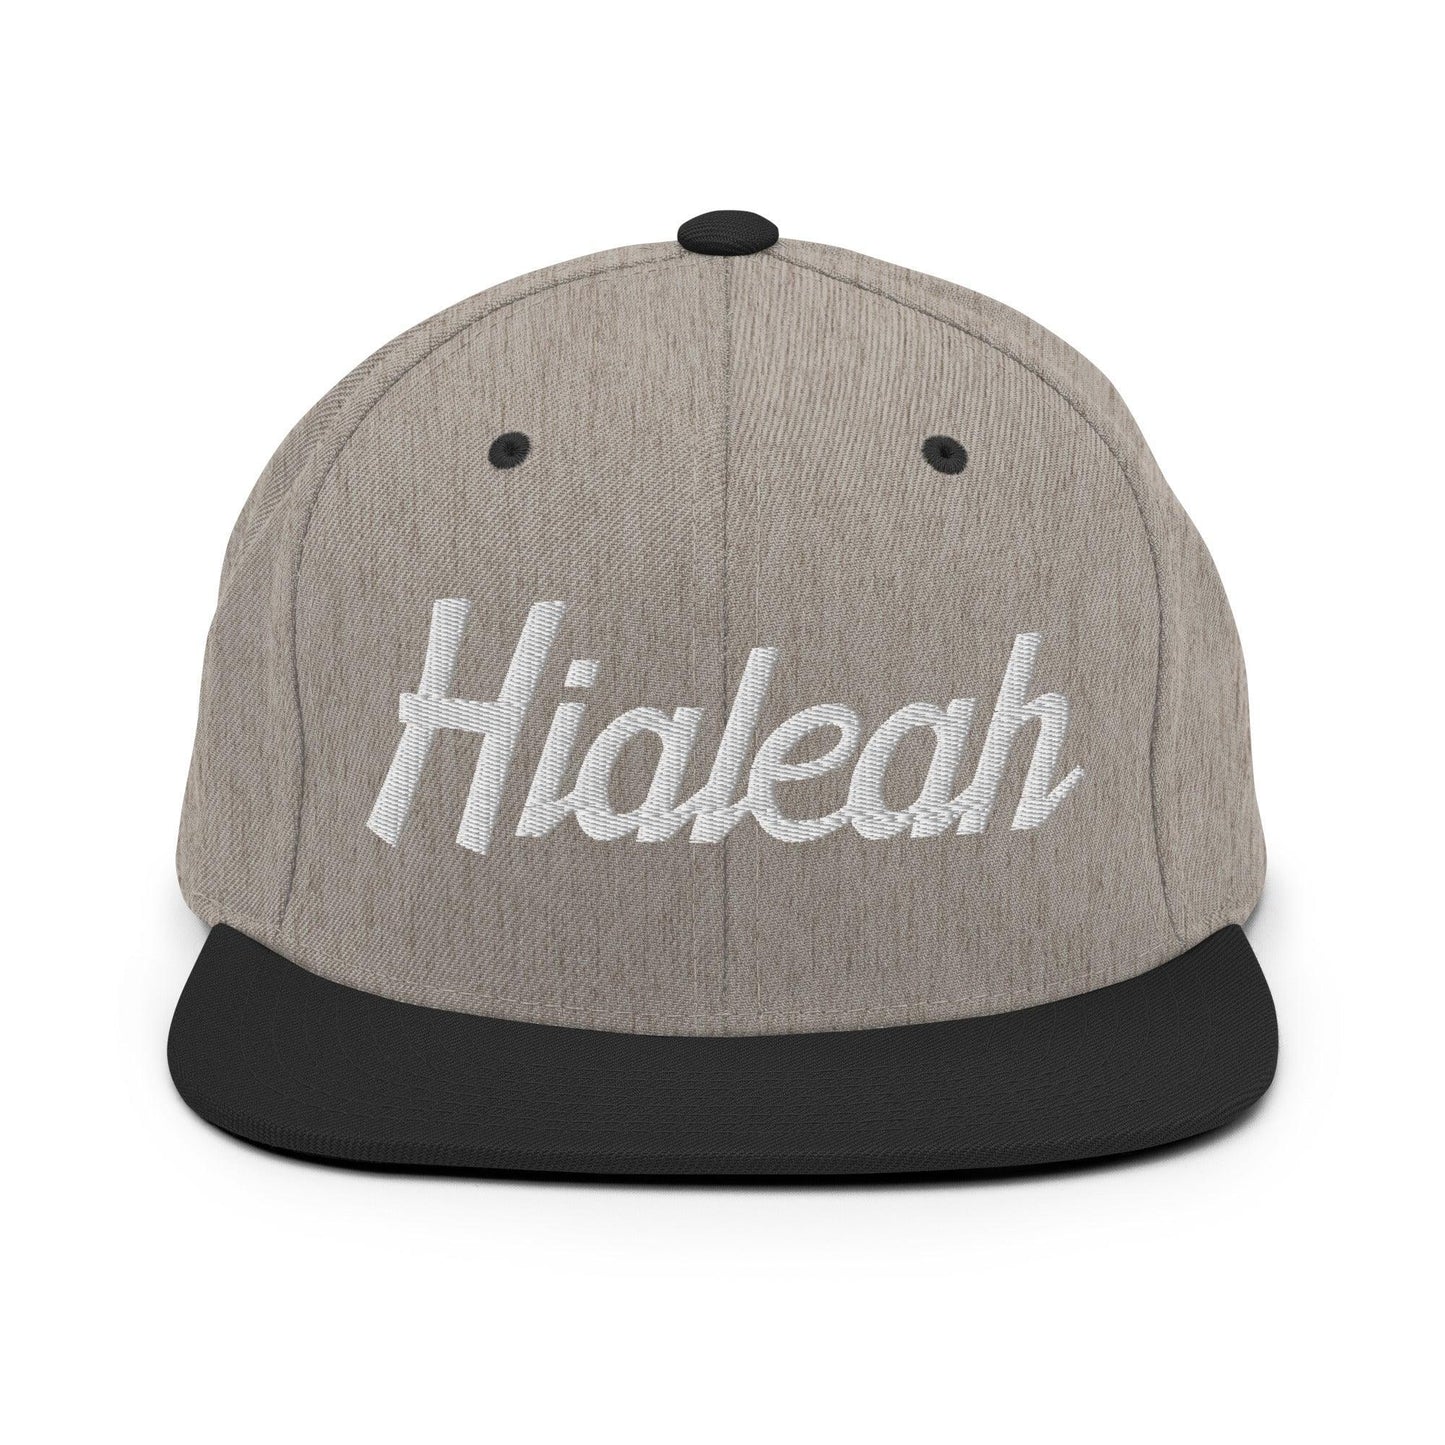 Hialeah Script Snapback Hat Heather/Black